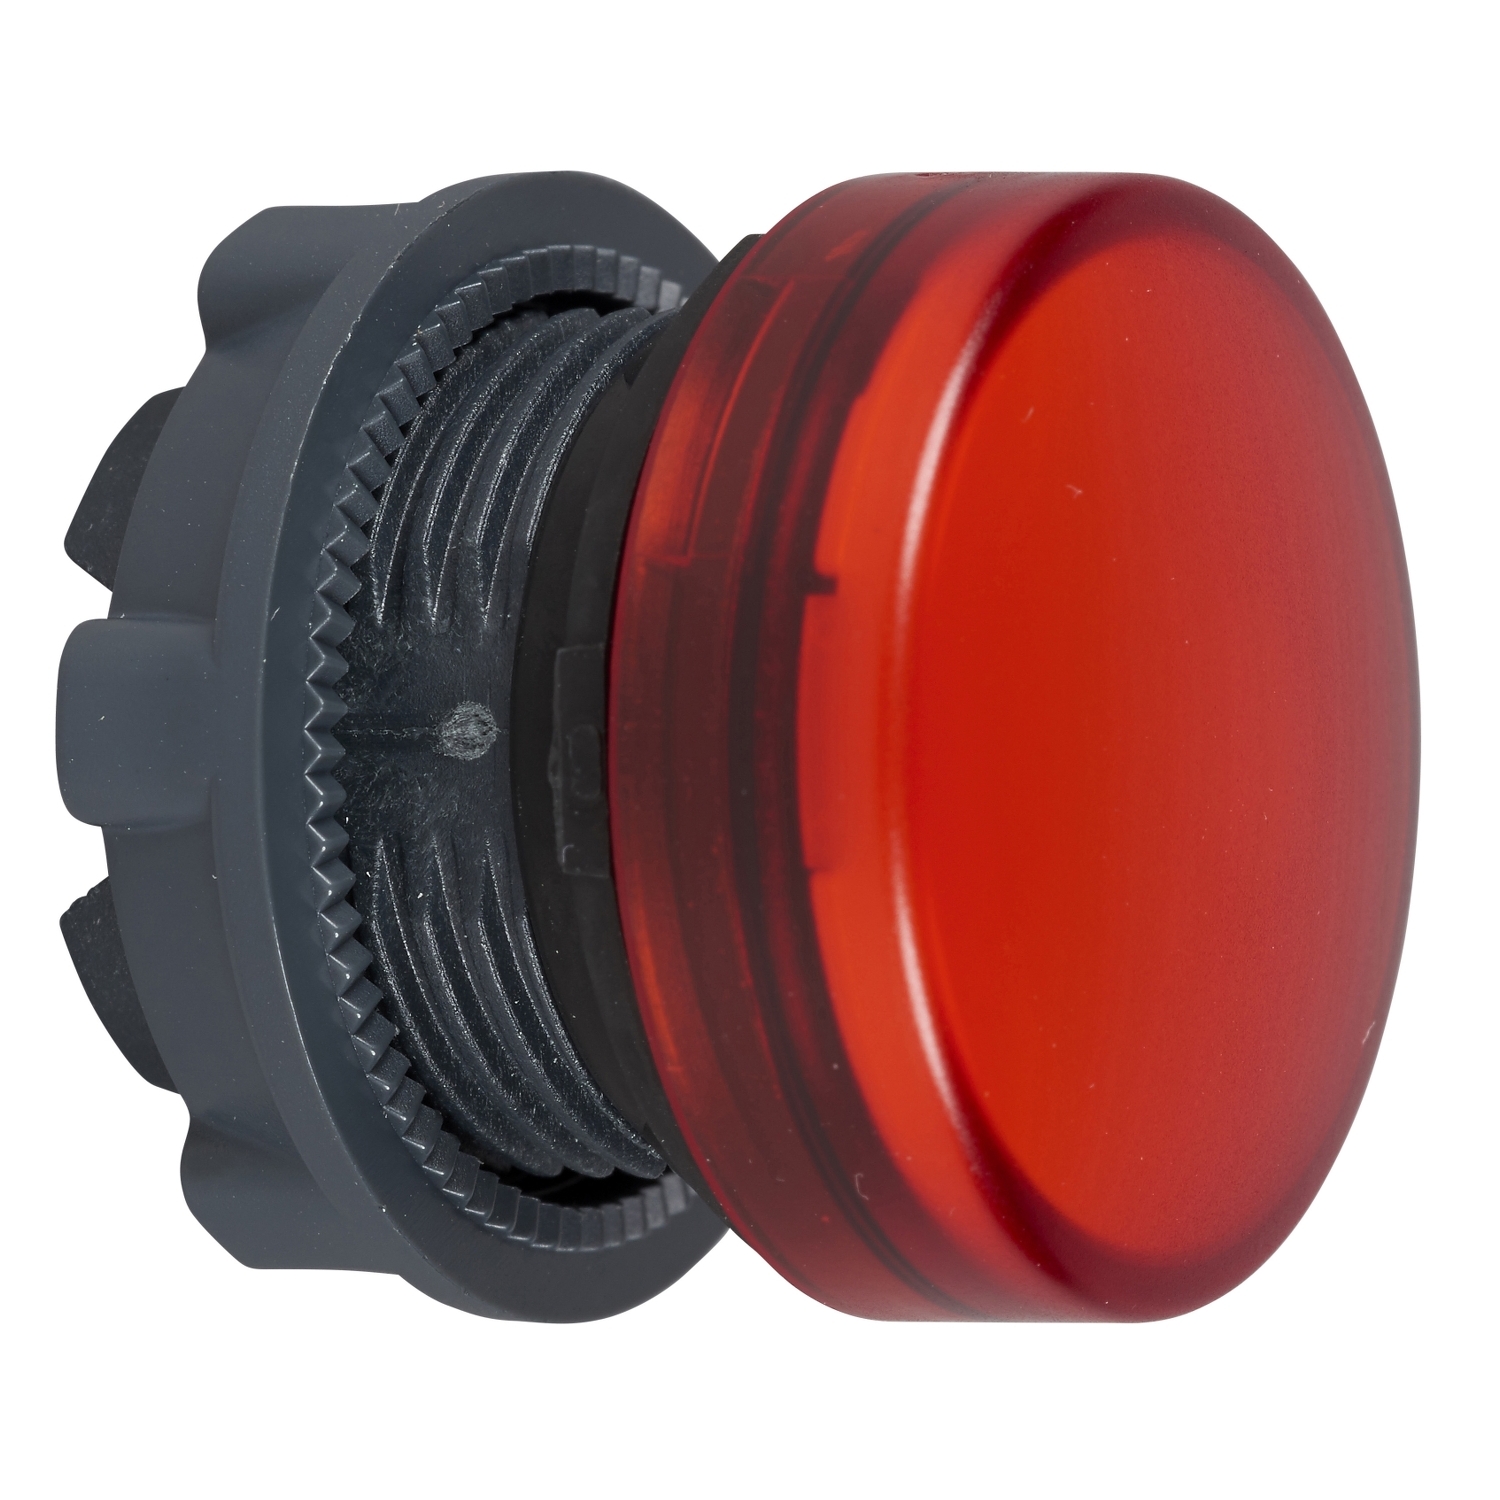 Head for pilot light, Harmony XB5, plastic, red, 22mm, universal LED, plain lens